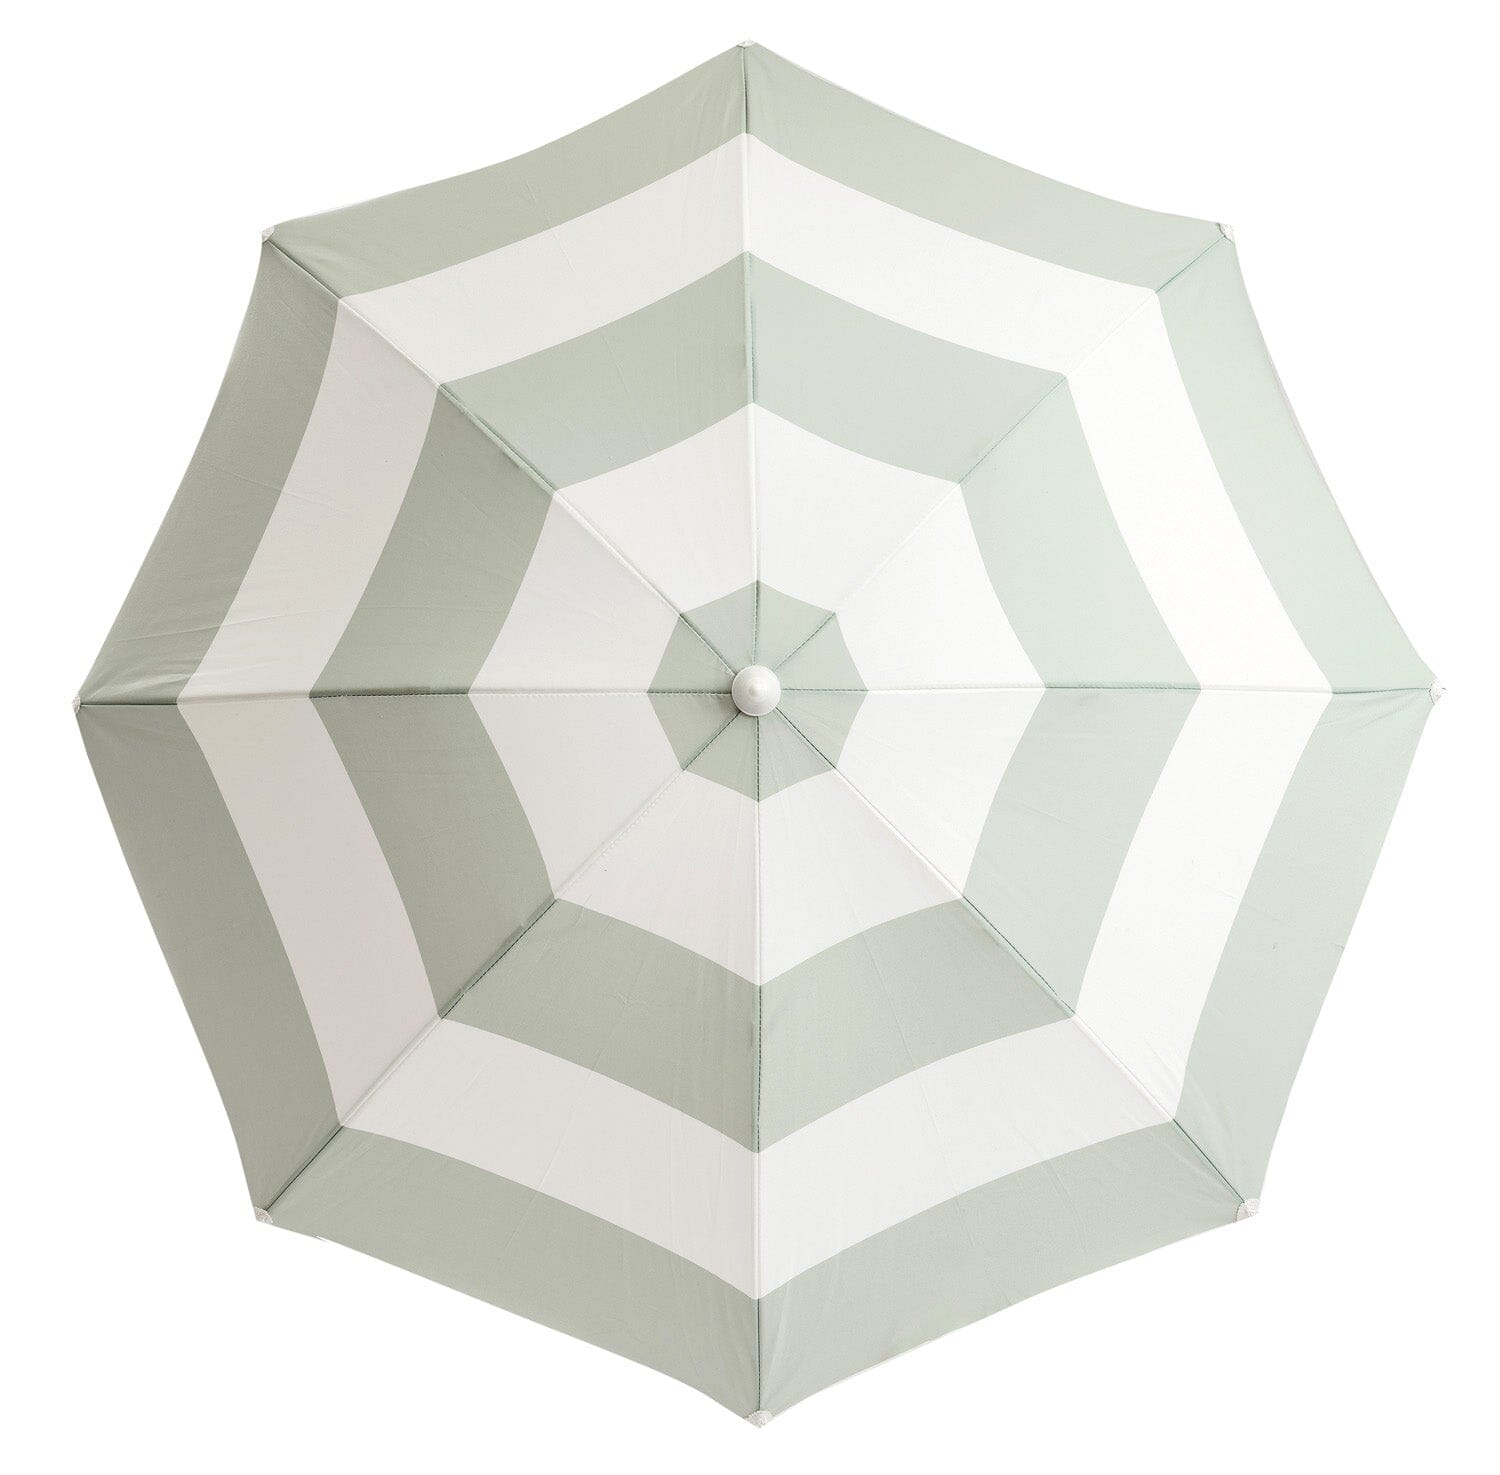 The Holiday Beach Umbrella - Sage Capri Stripe